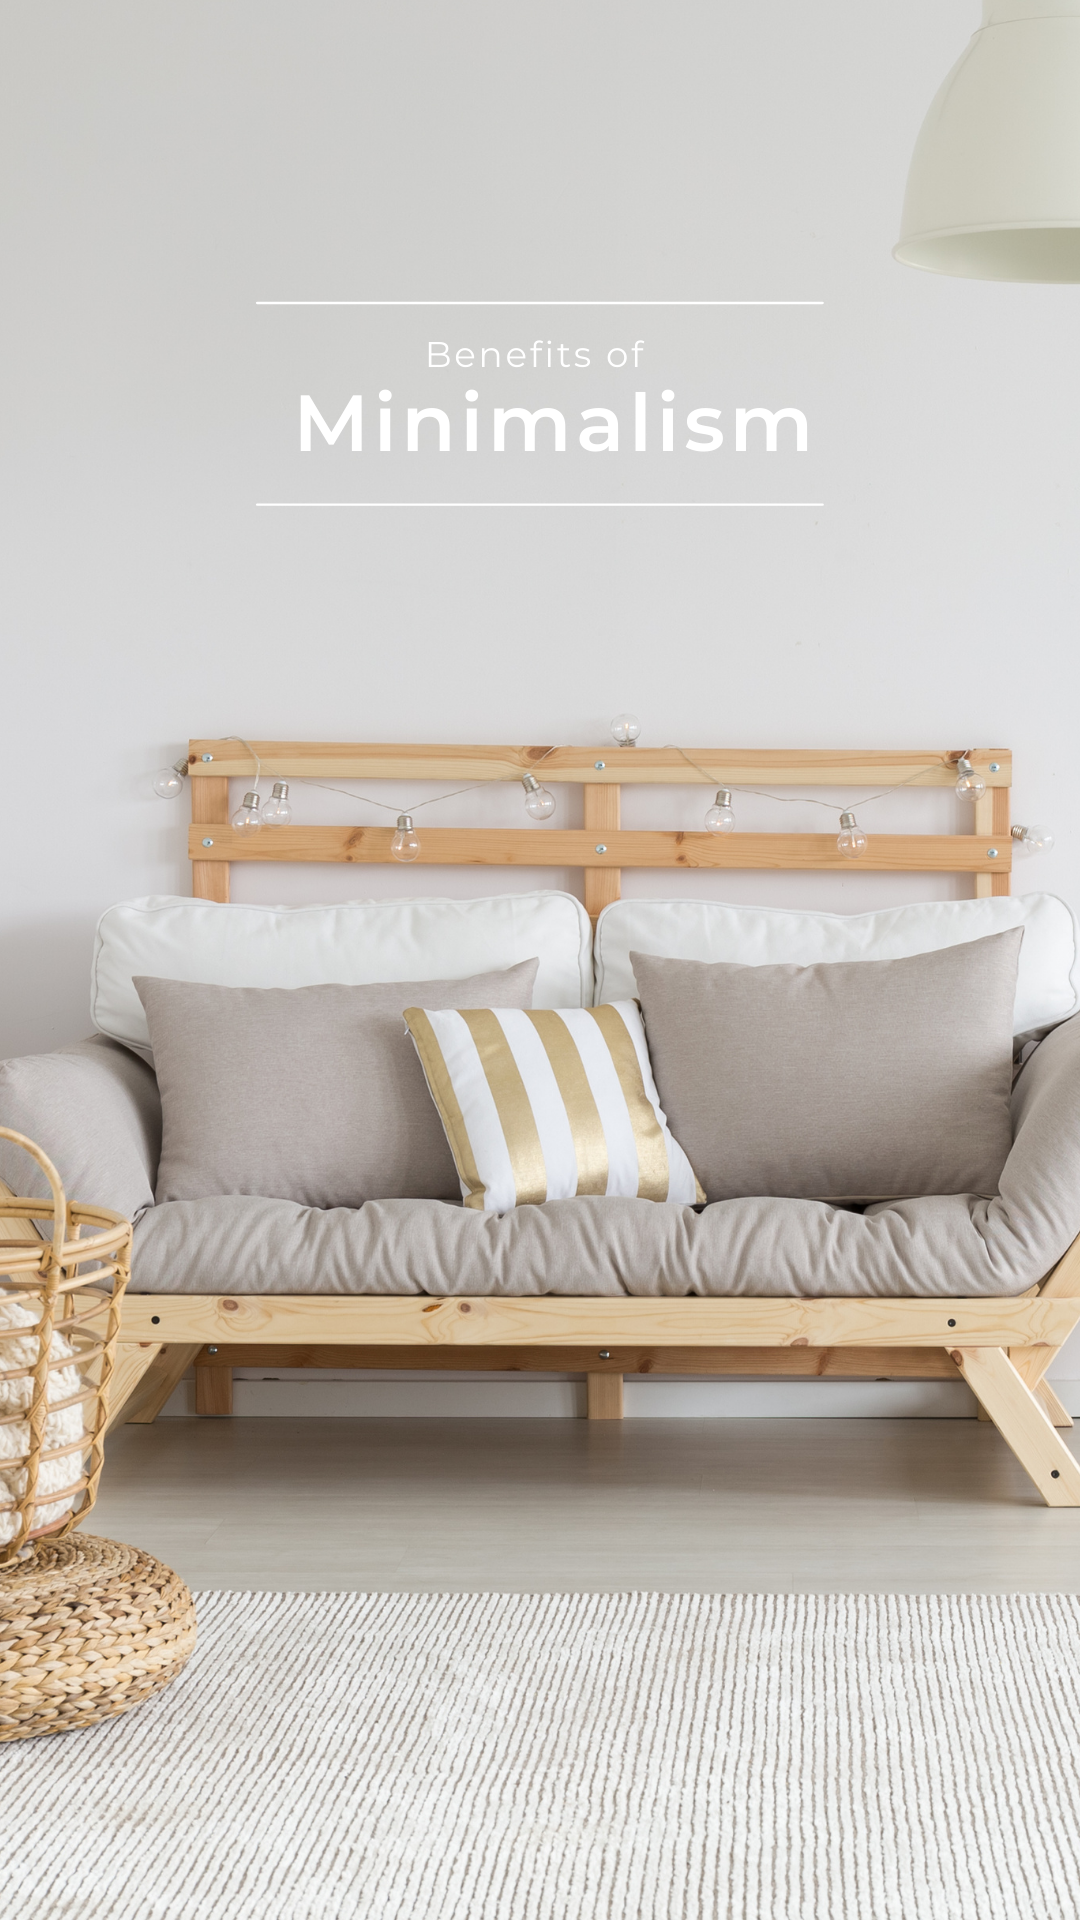 Benefits of Minimalism